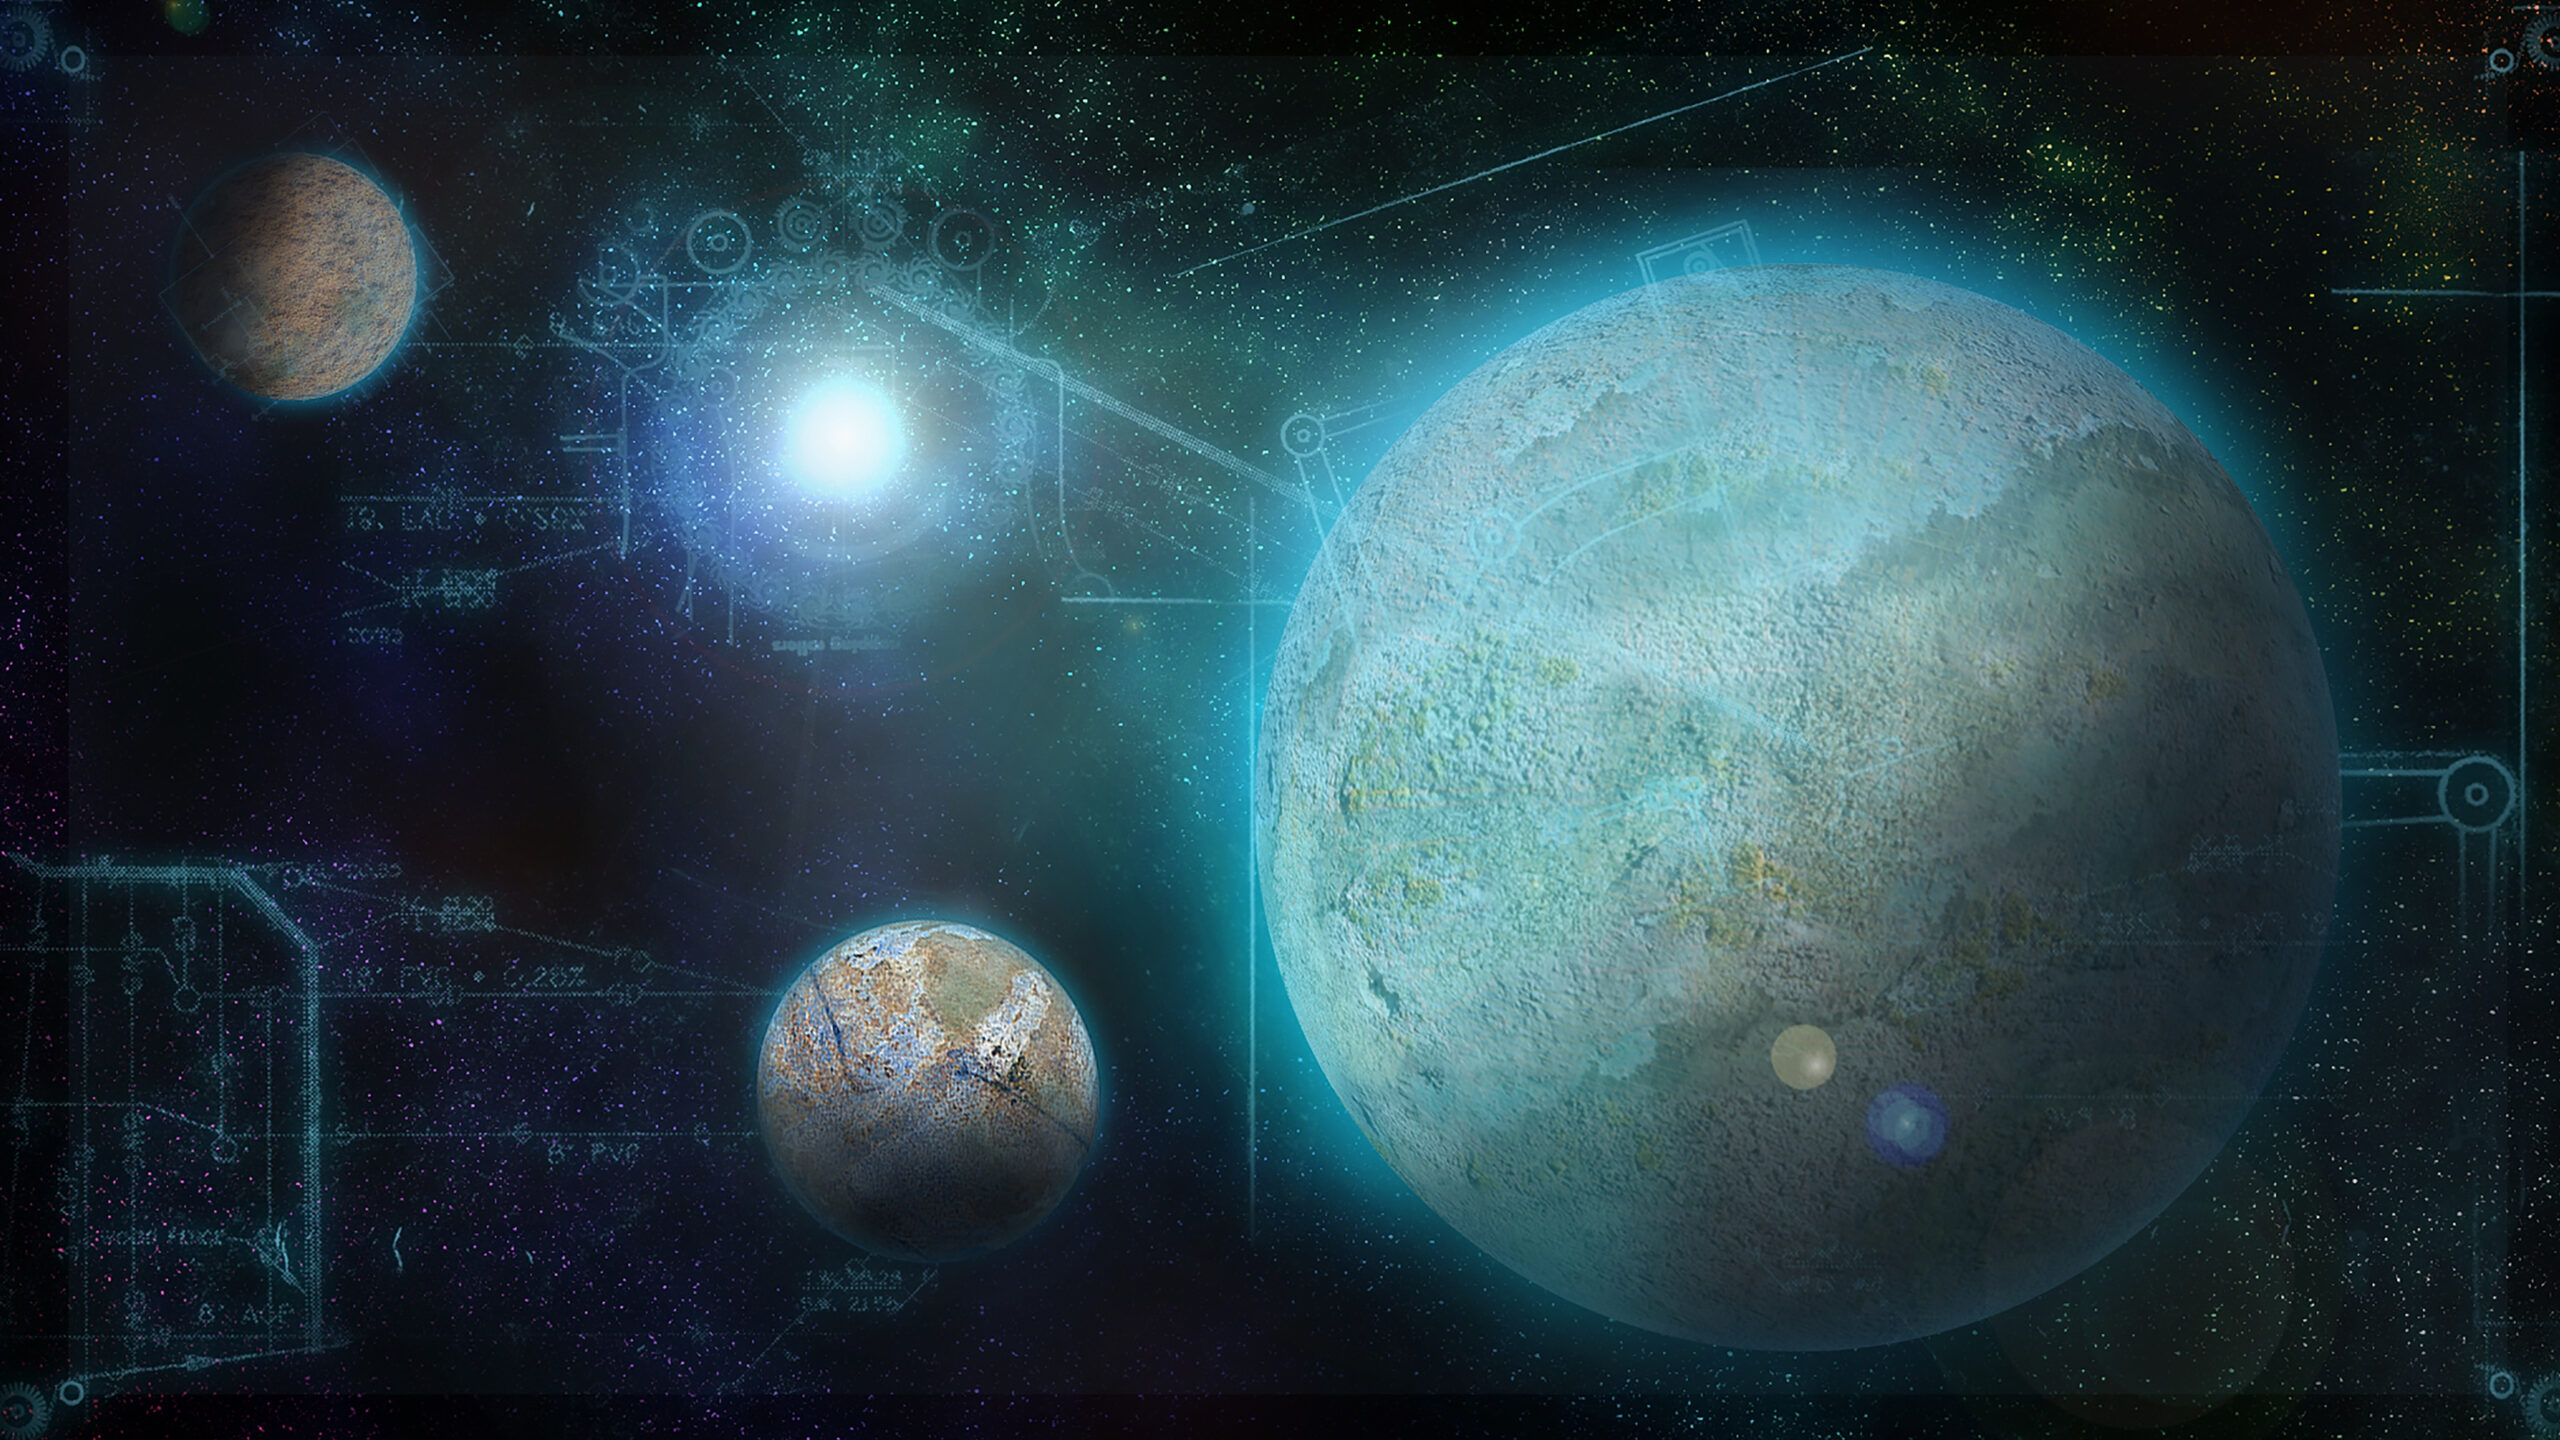 Sebuah planet ekstrasurya mengungkap tanda kunci kemungkinan adanya kehidupan